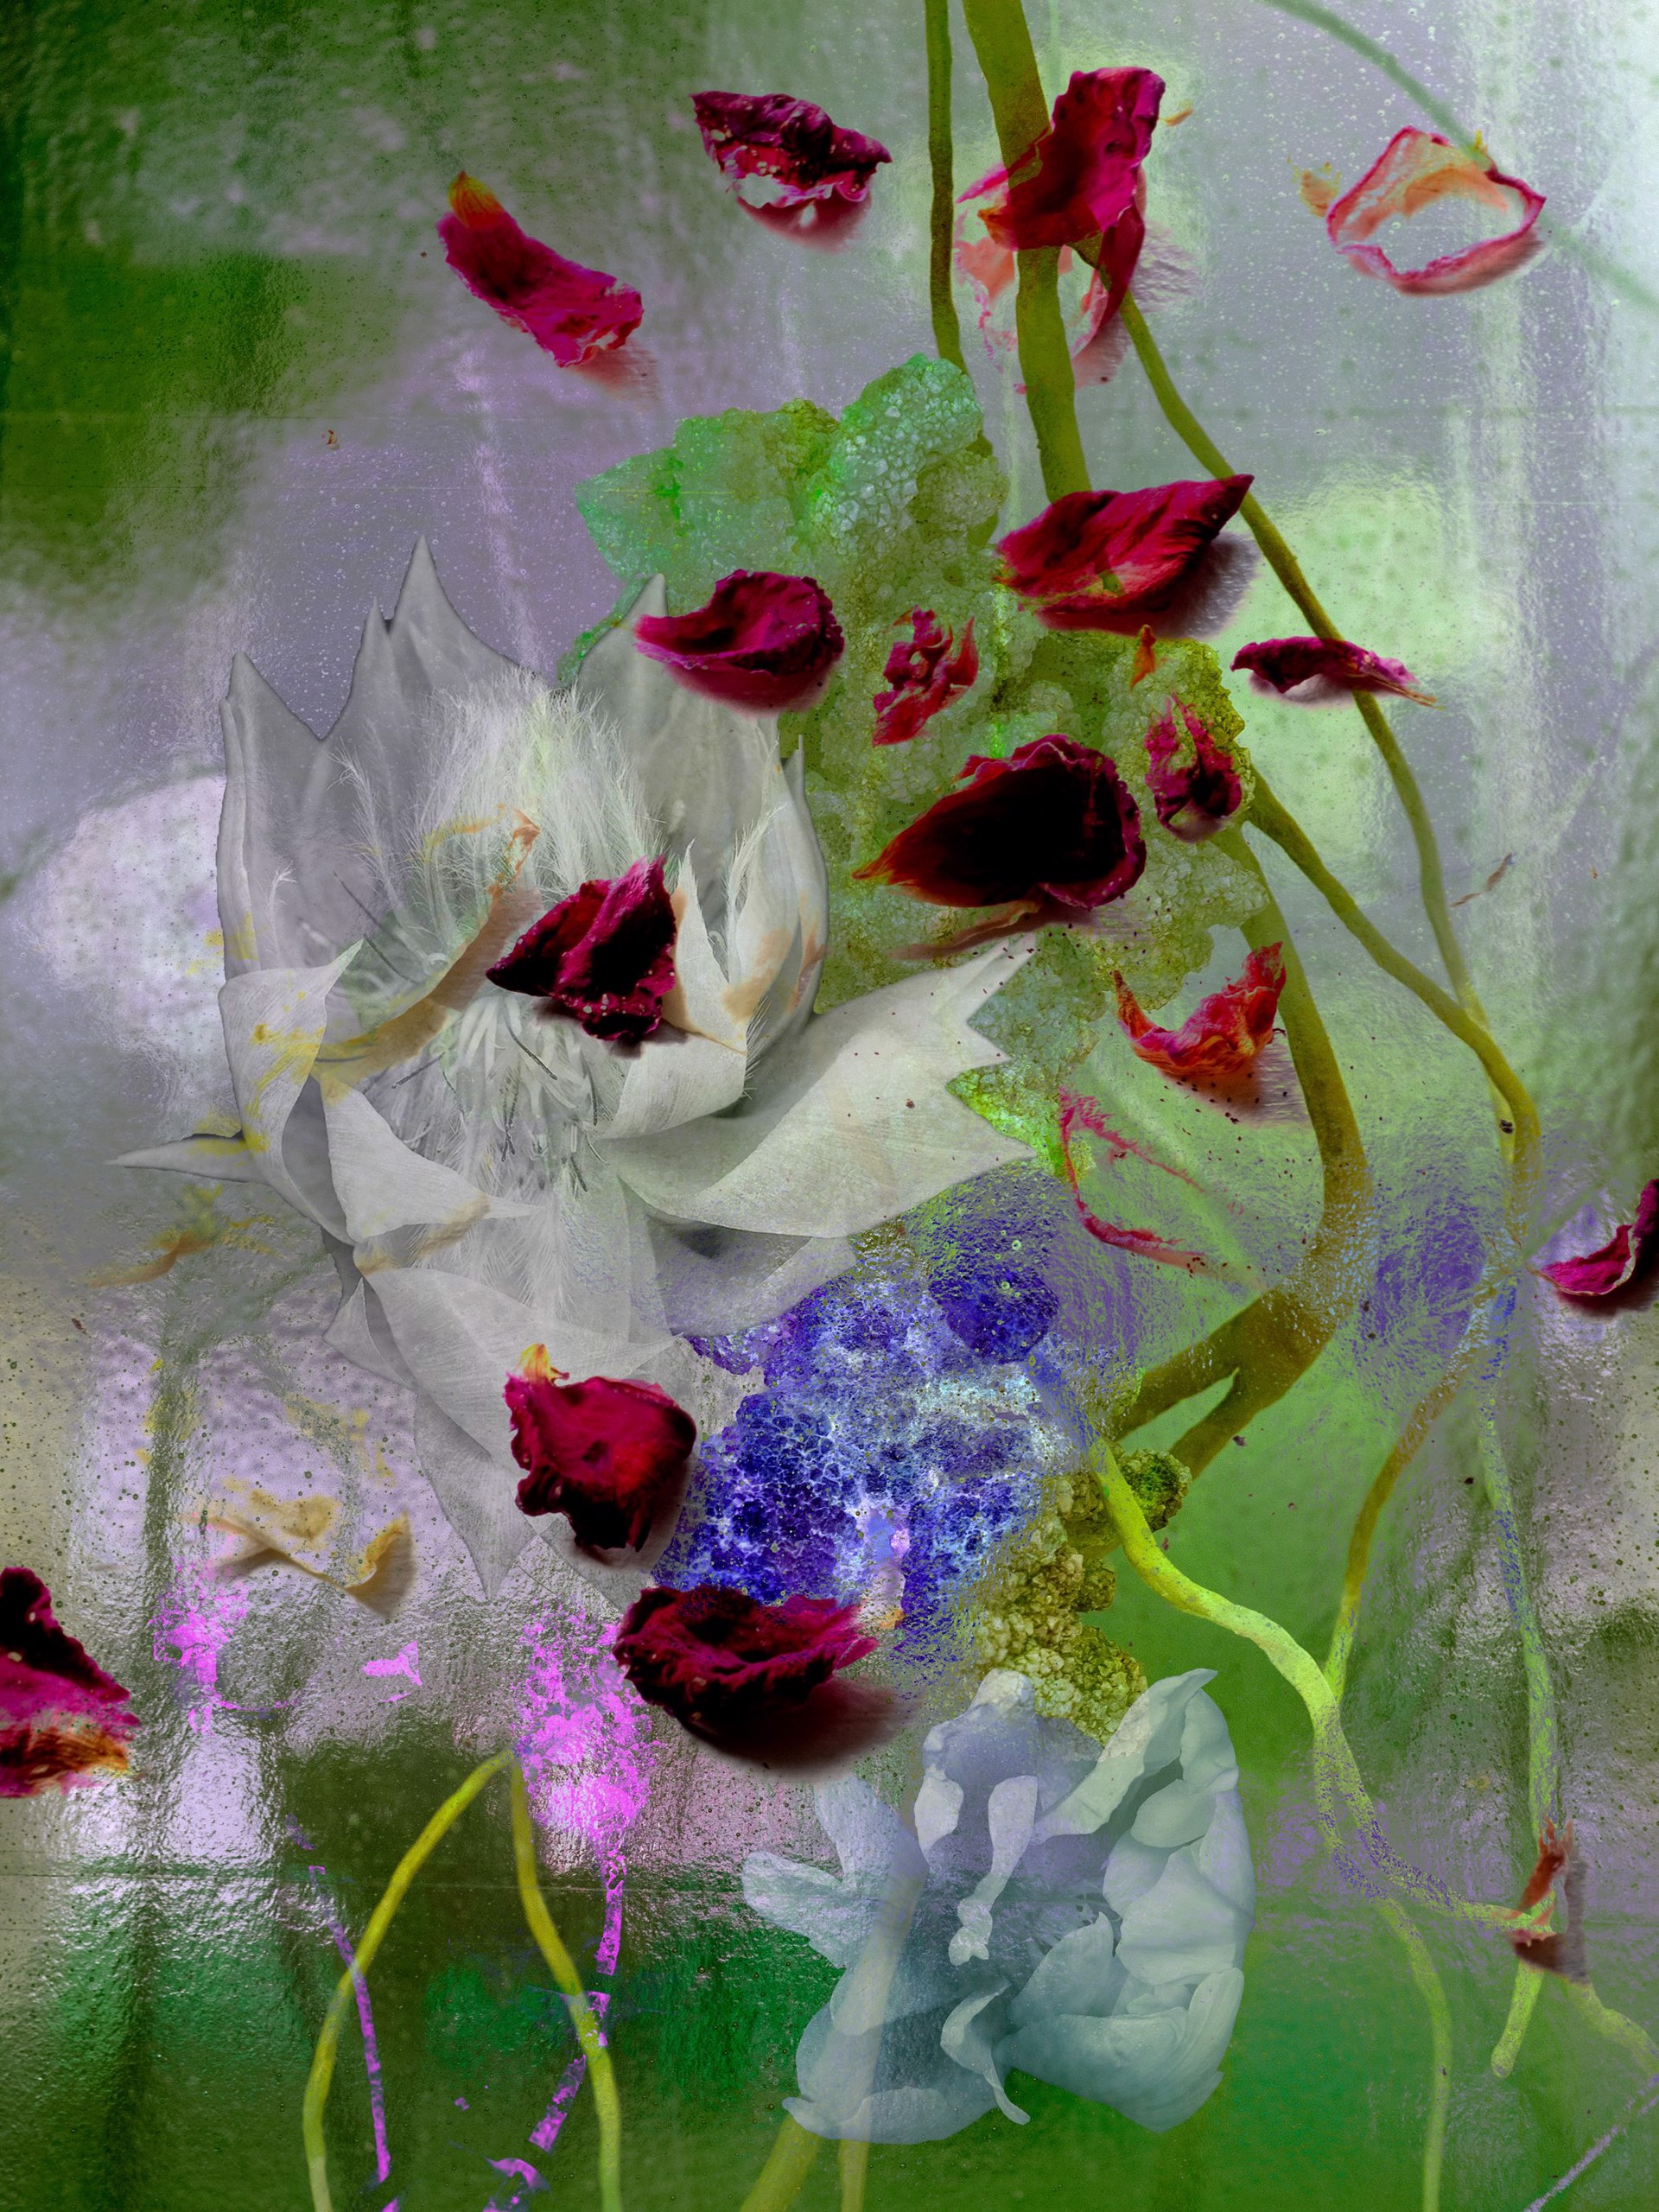 FLOWERS SERIES I NO. 8 by CAROL EISENBERG